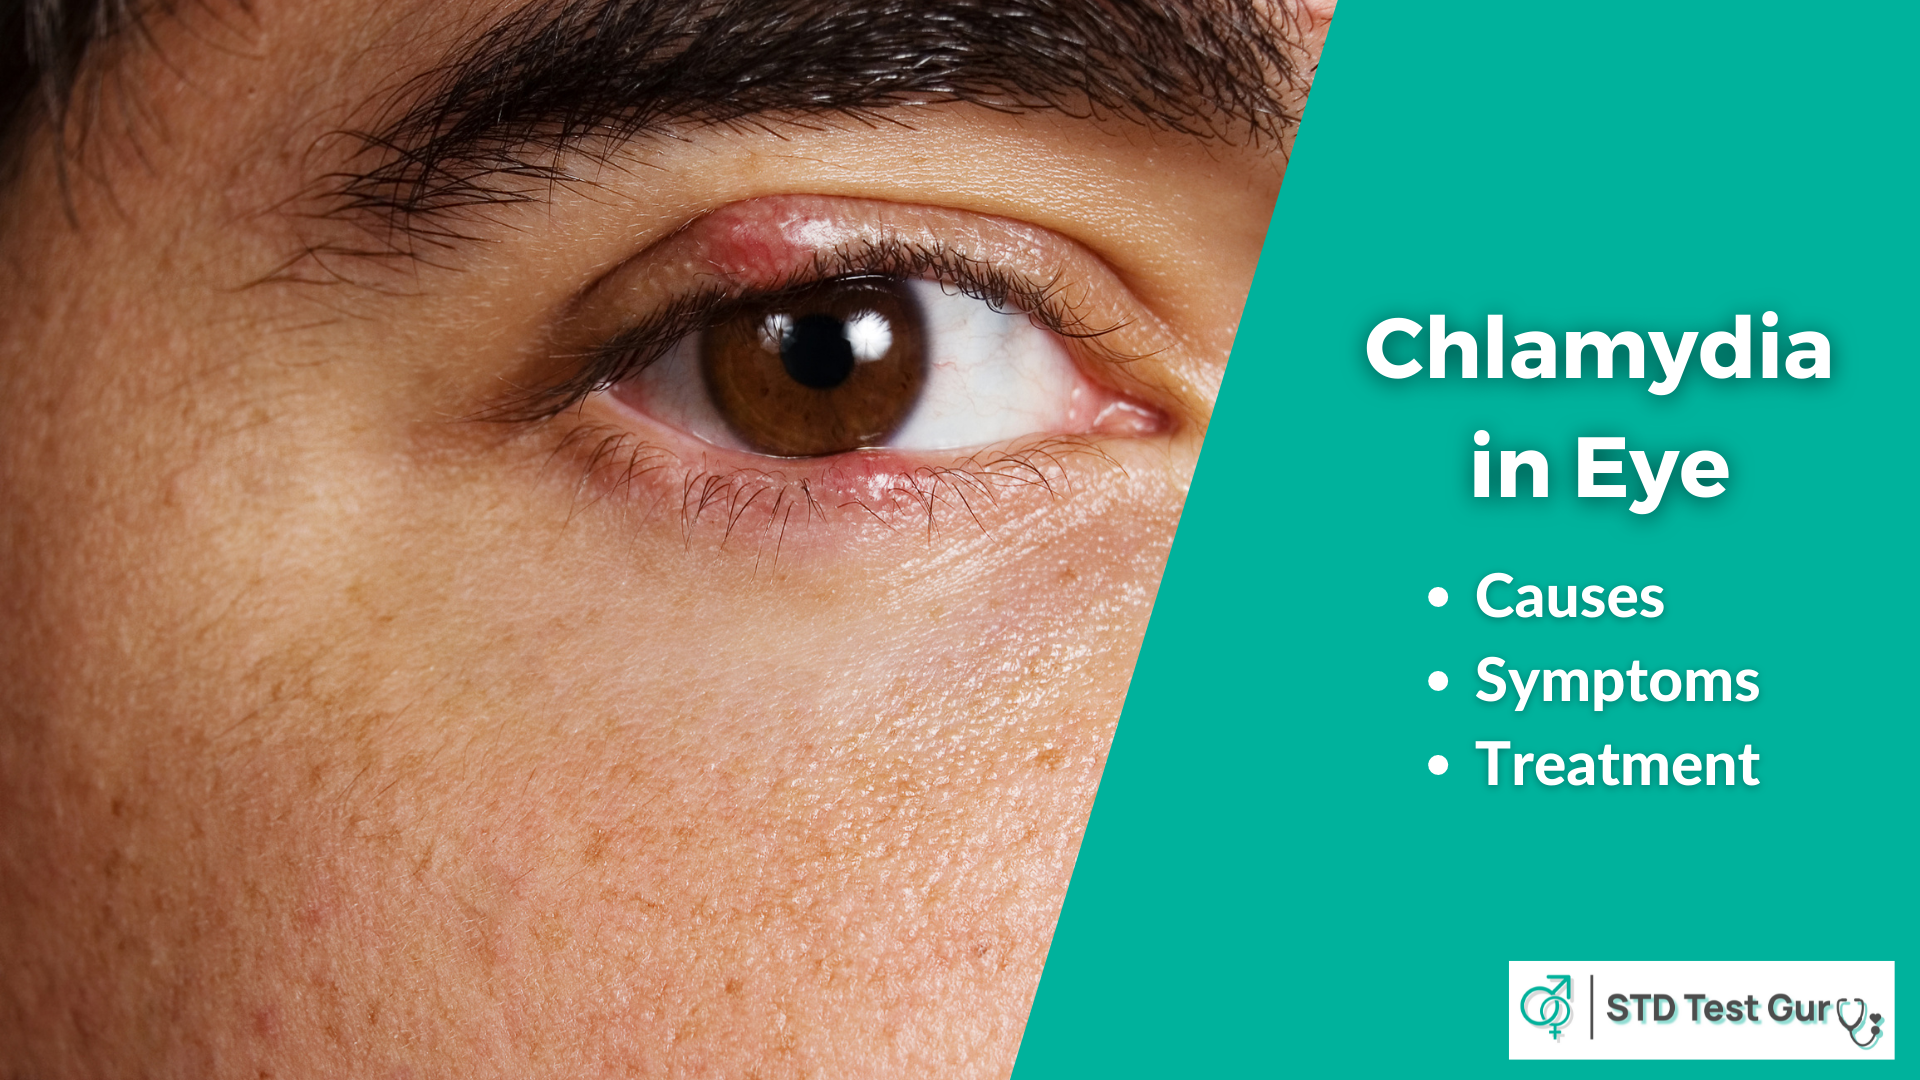 Chlamydia in Eye Symptoms and Causes - STDTestGuru